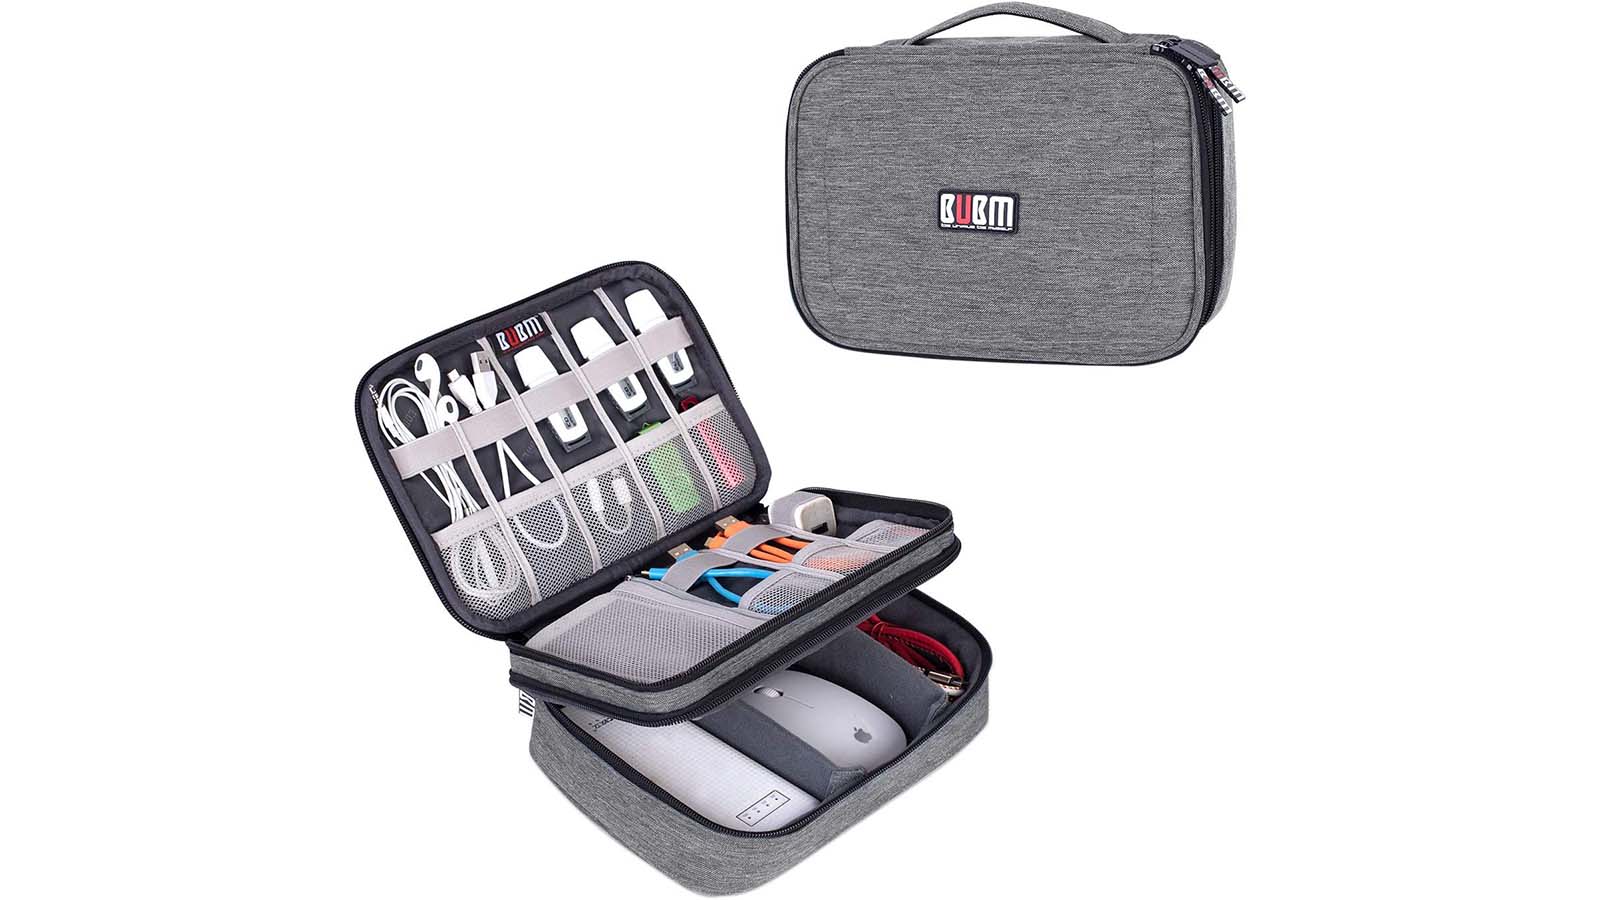 Bevegekos Medium Travel Tech Organizer, Carrying Case Bag for Electronics  and Accessories (Dark Grey, Medium)